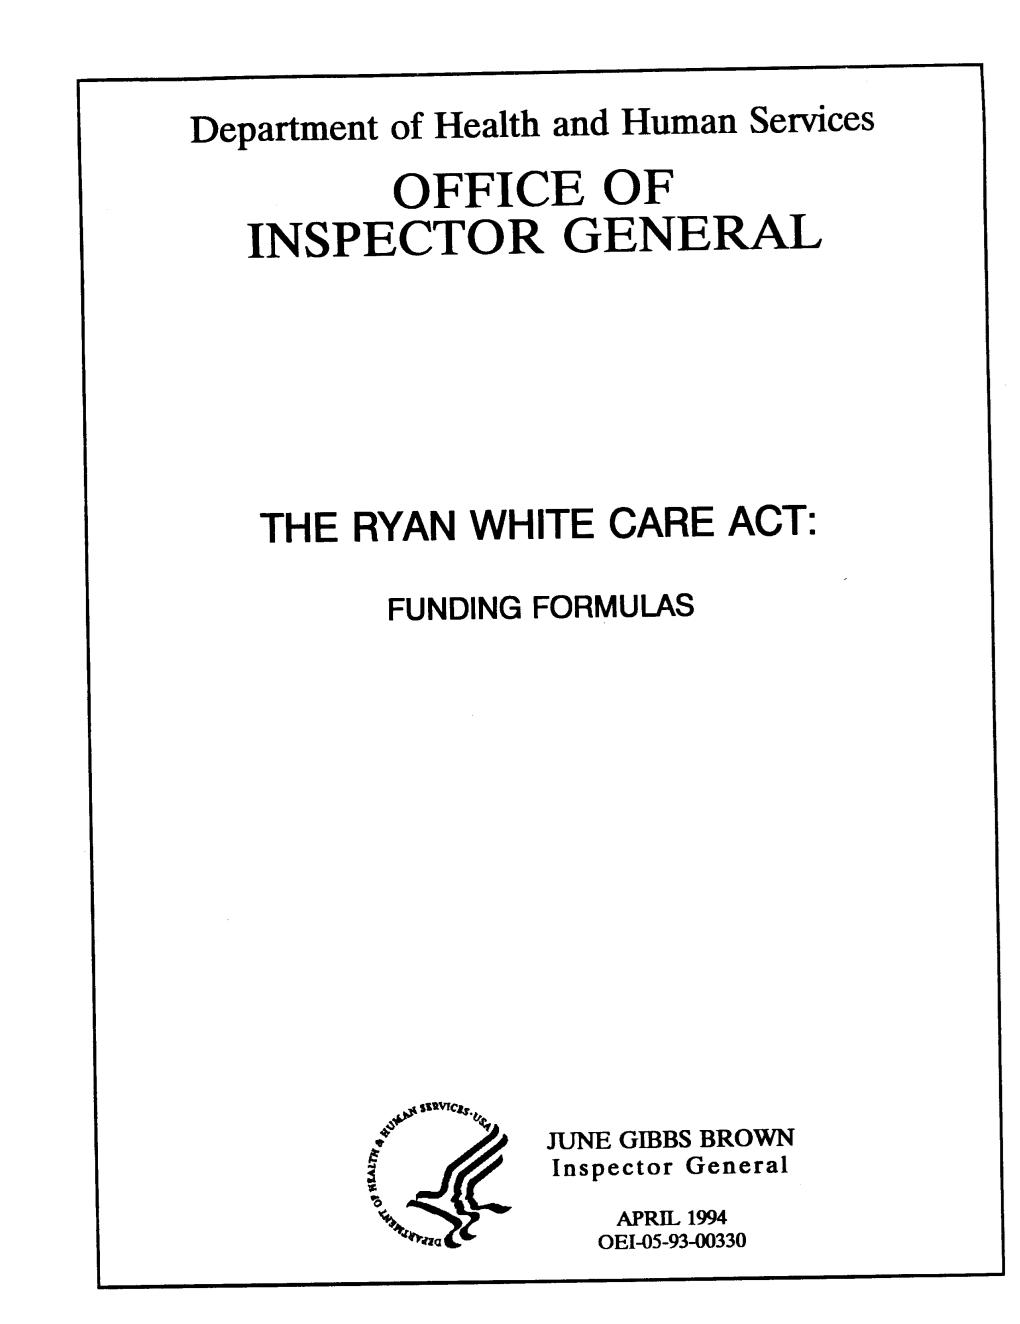 The Ryan White Care Act